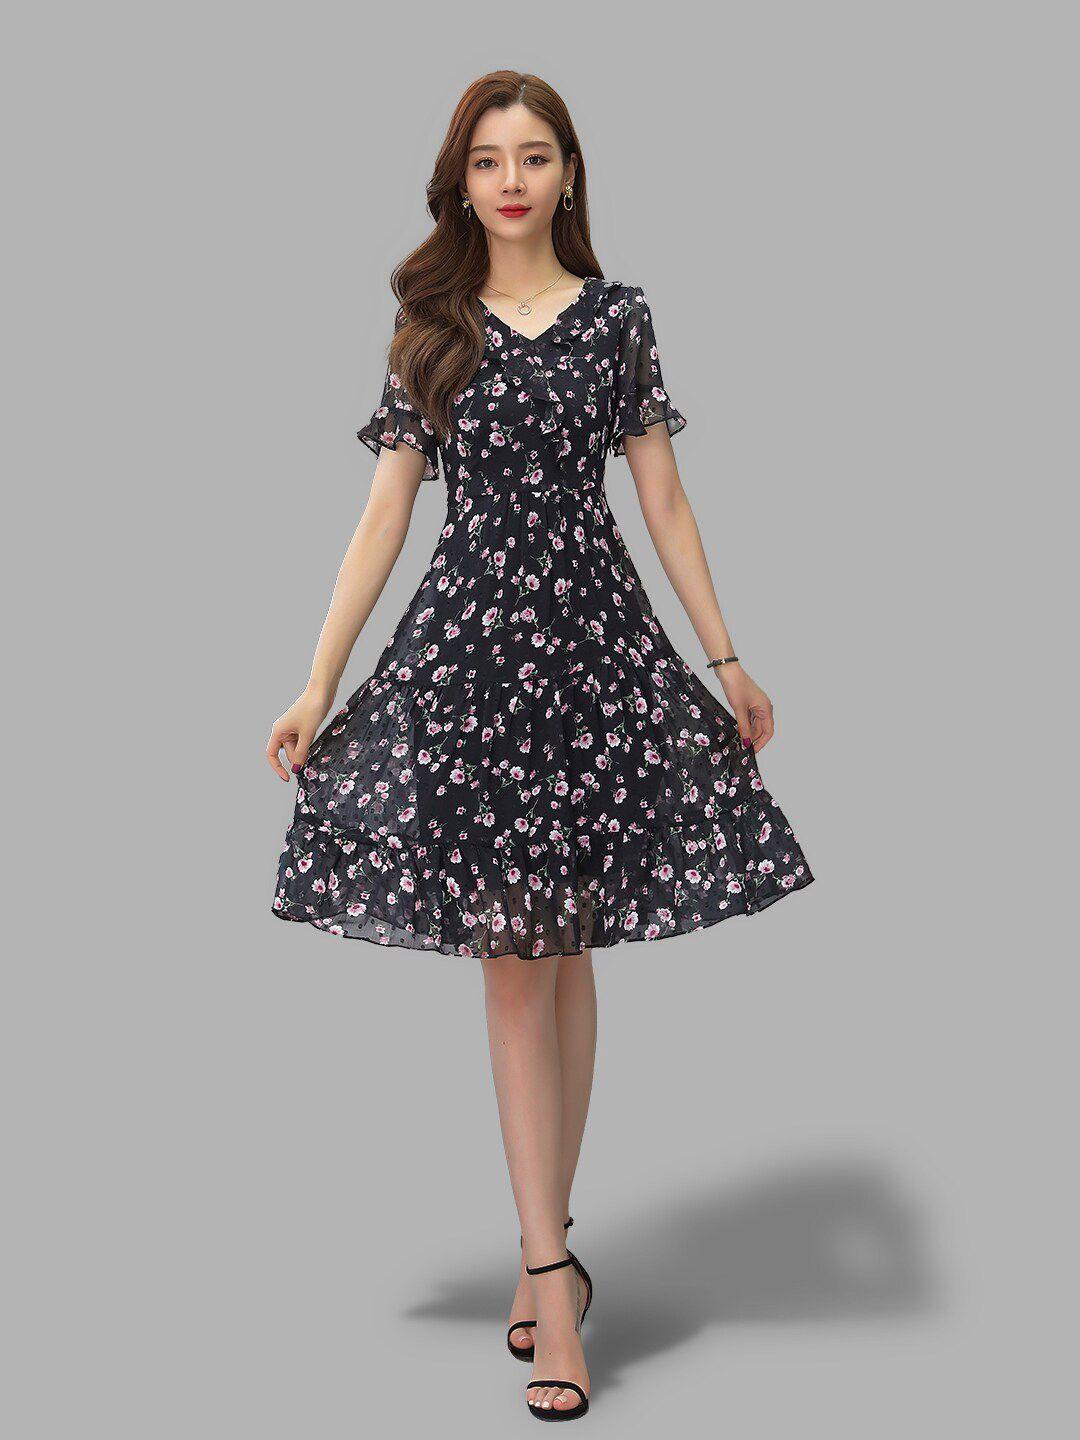 jc collection black & pink floral fit & flare dress